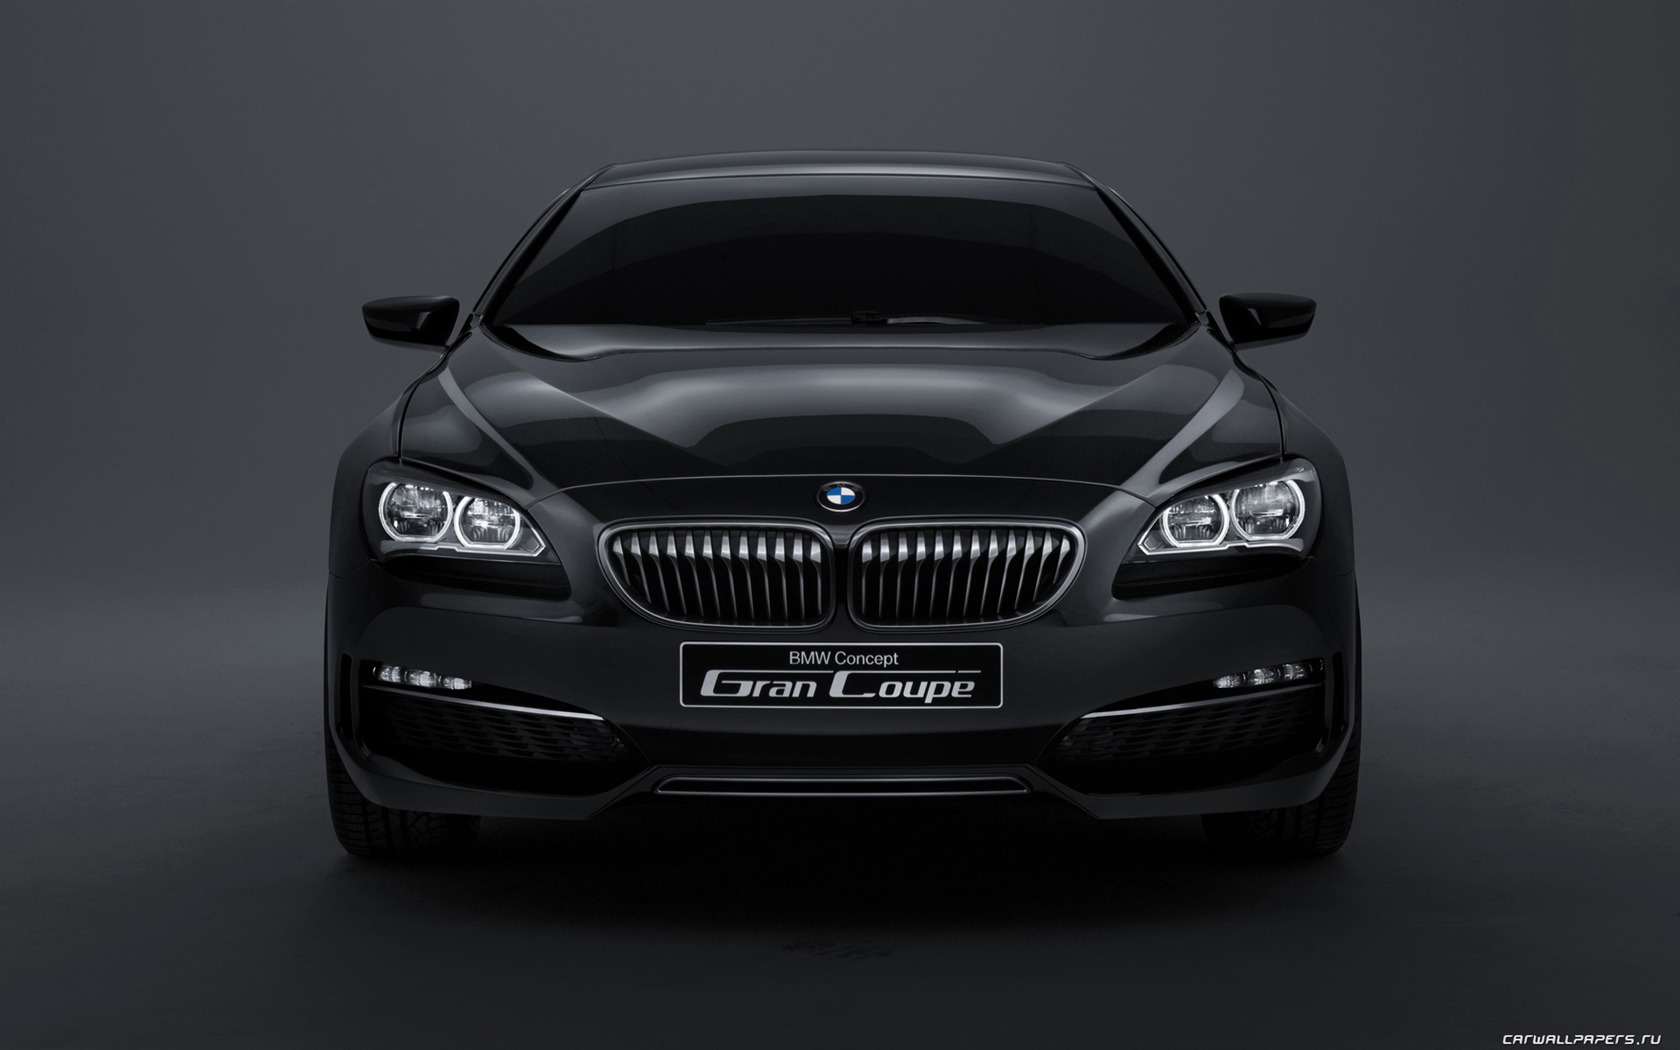 BMW Concept Gran Coupe - 2010 寶馬 #4 - 1680x1050